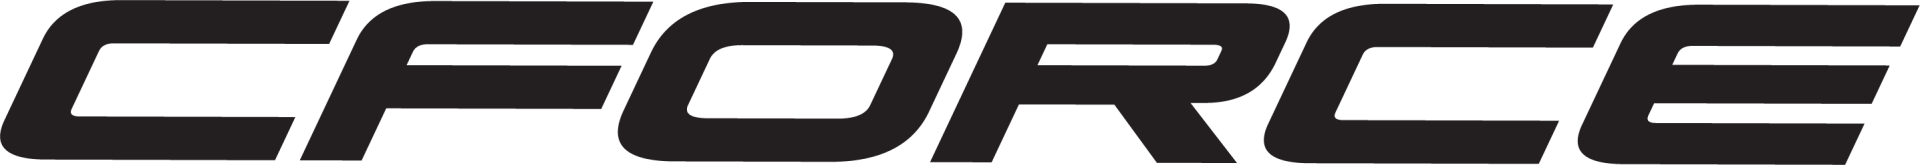 CFORCE 500 Logo